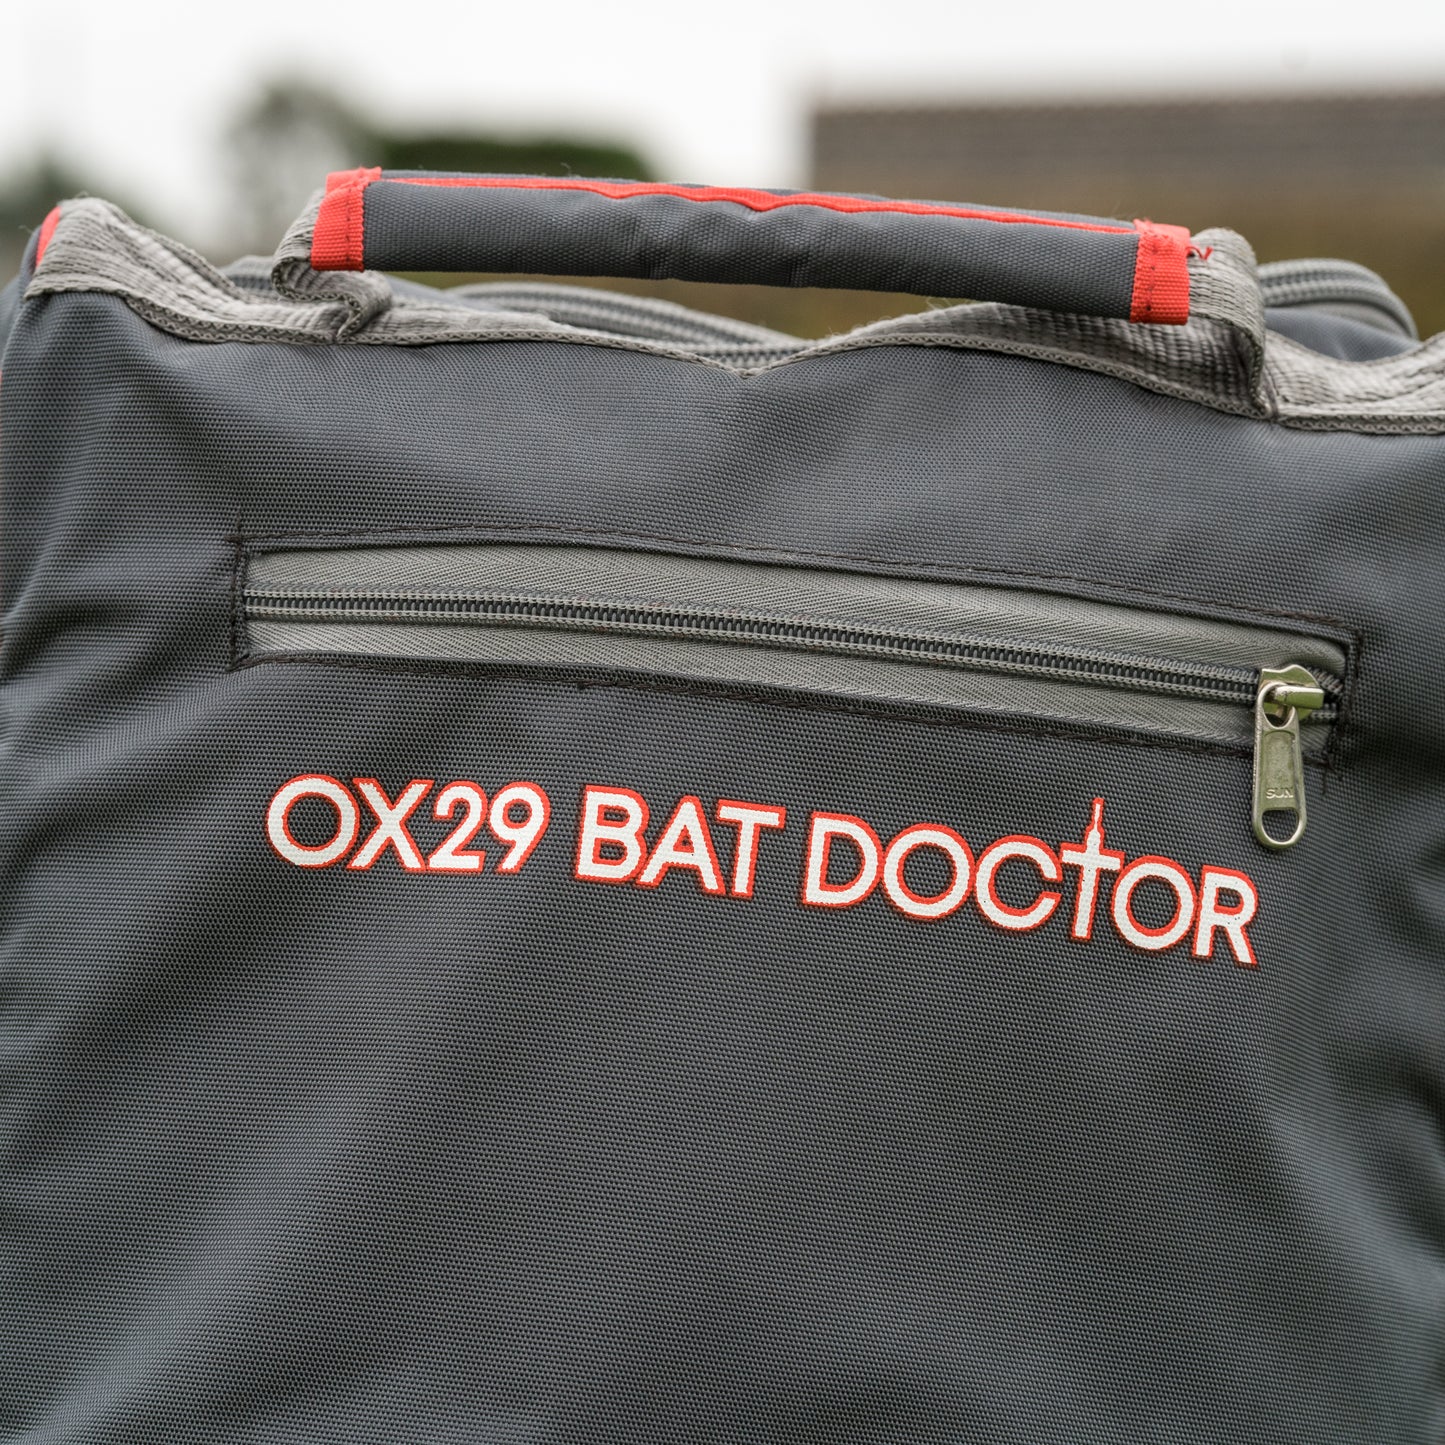 OX29 Bat Doctor Duffle Bag Holdall